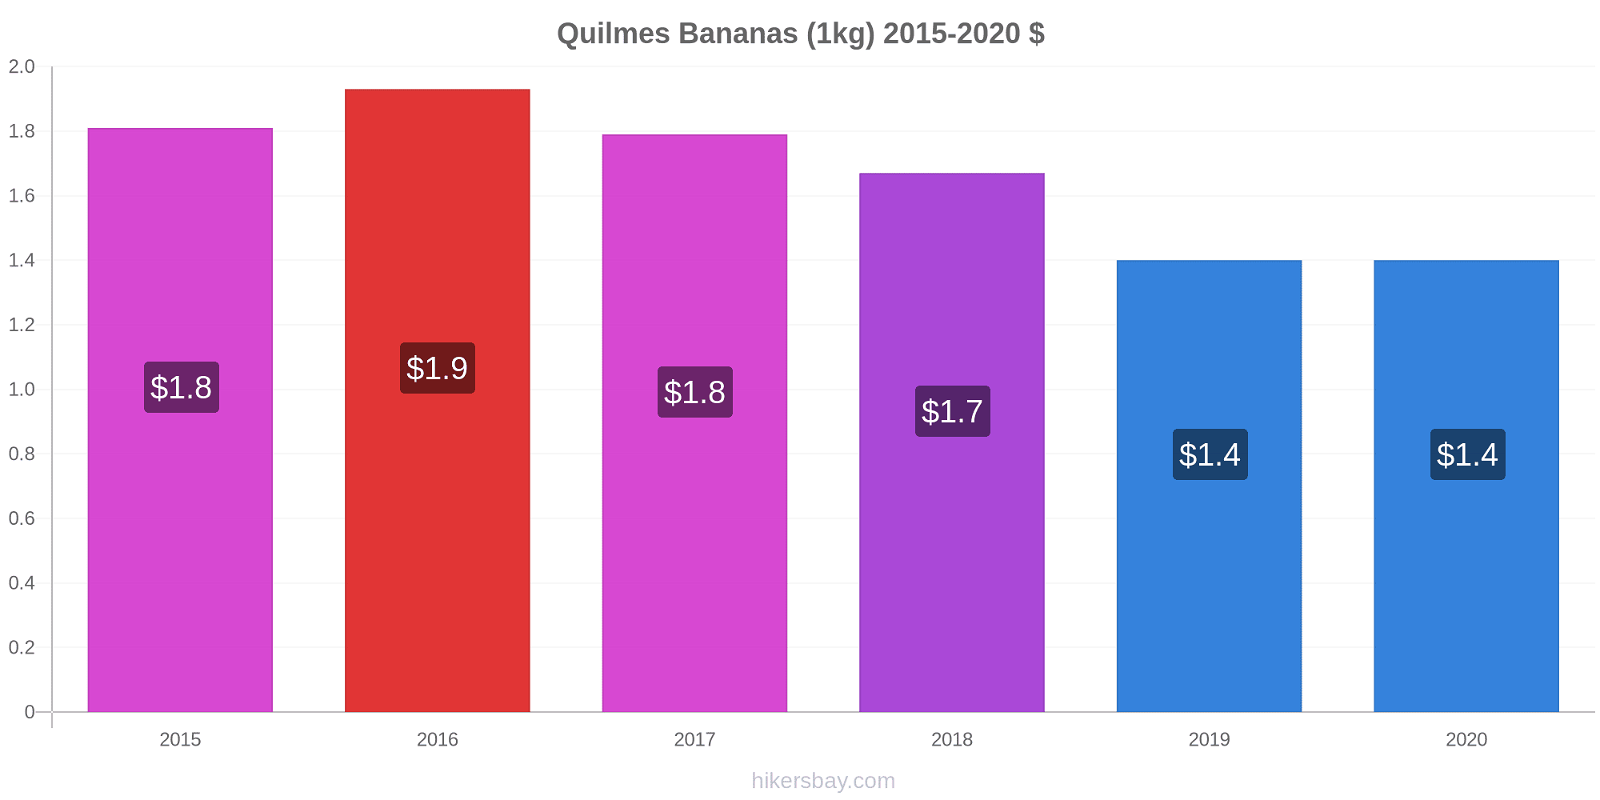 Quilmes price changes Bananas (1kg) hikersbay.com